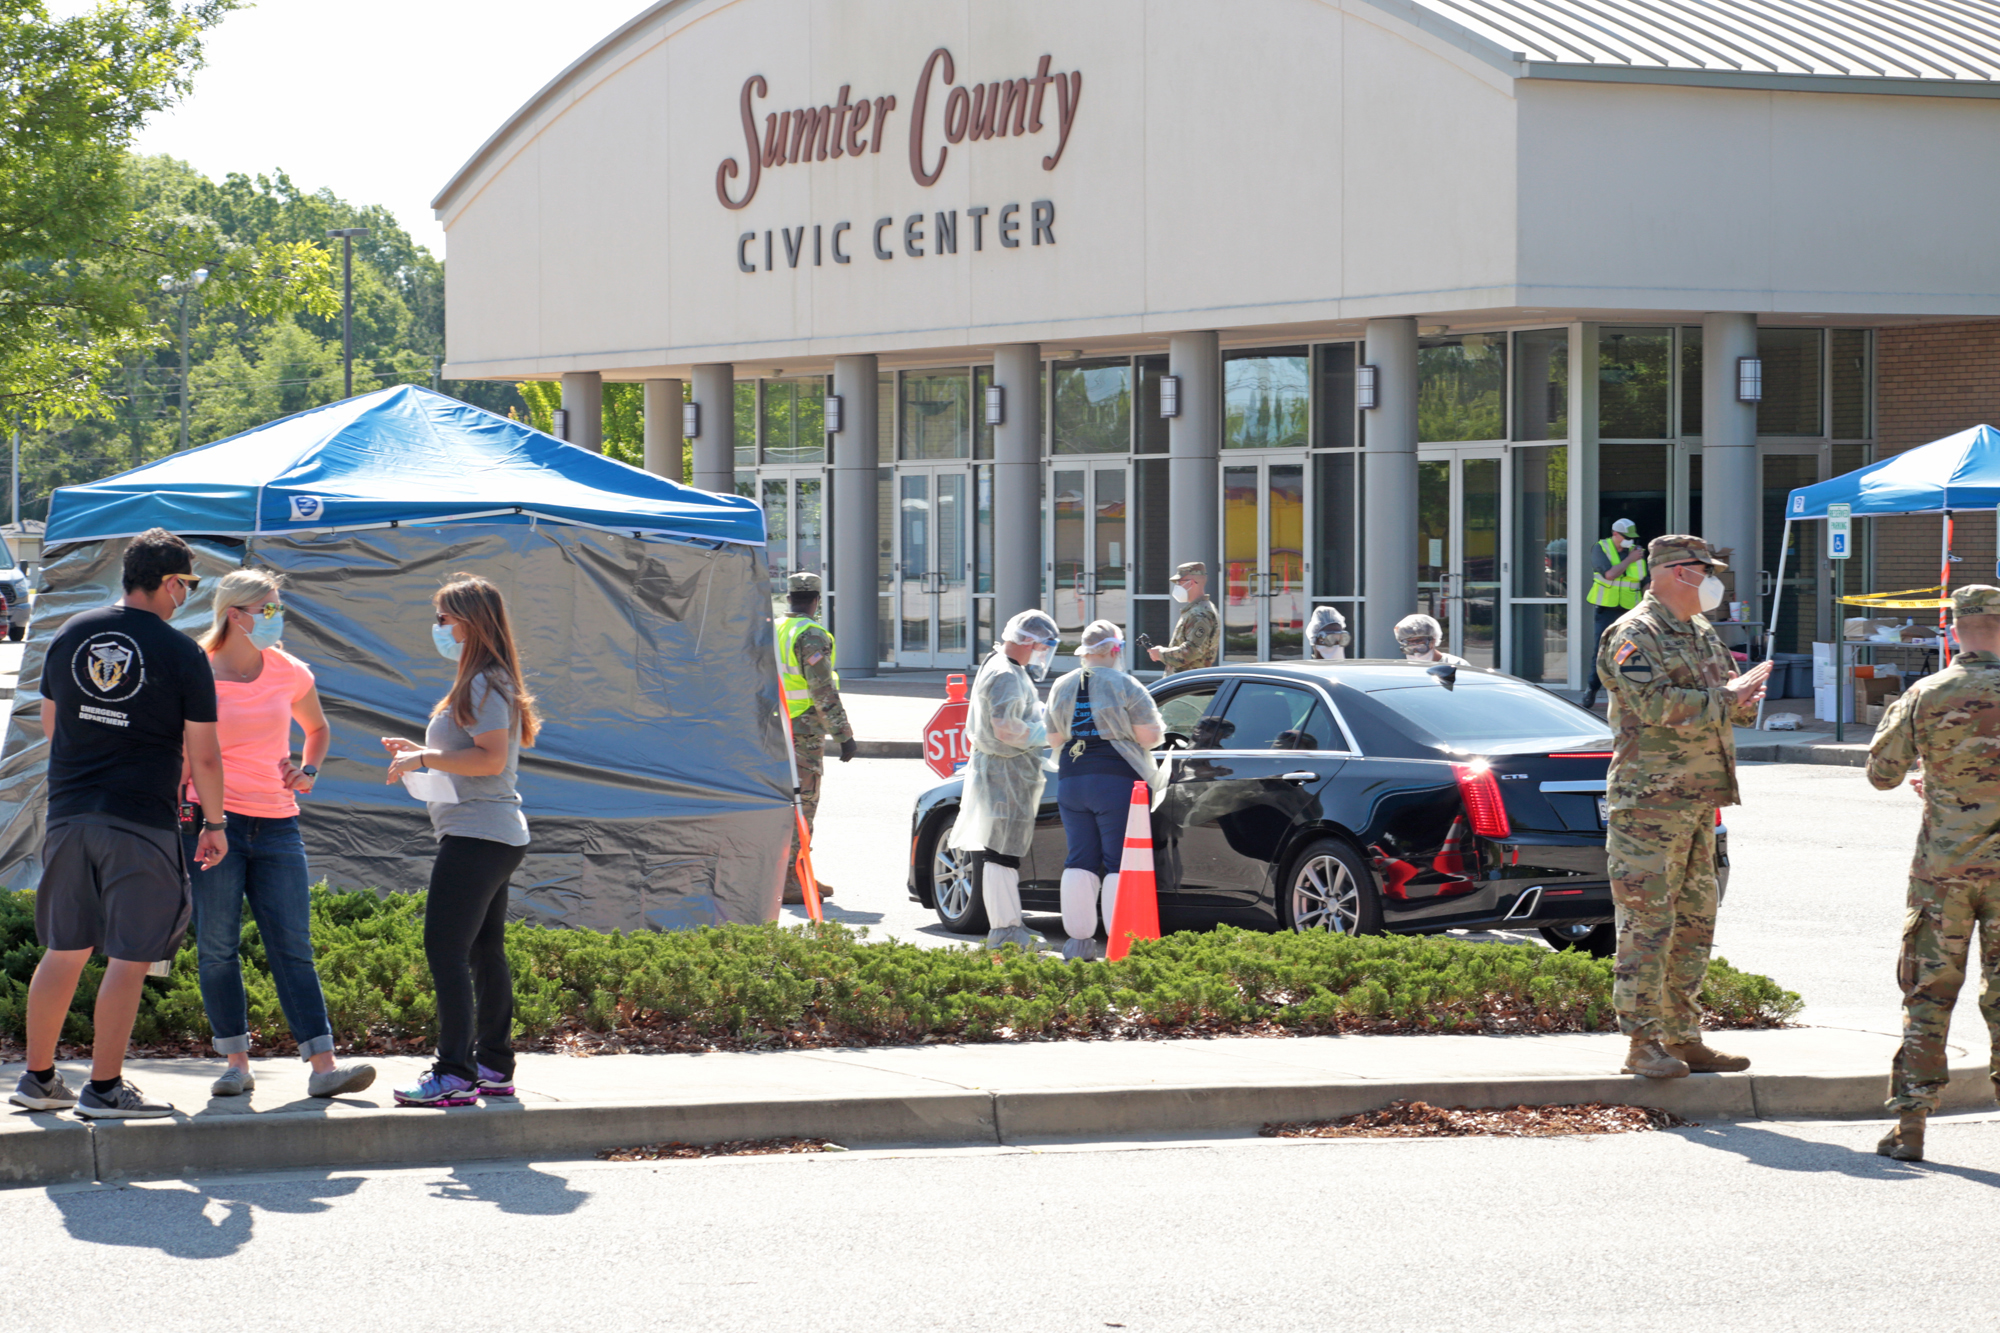 May 6 2020 Sumter County Civic Center coronavirus testing